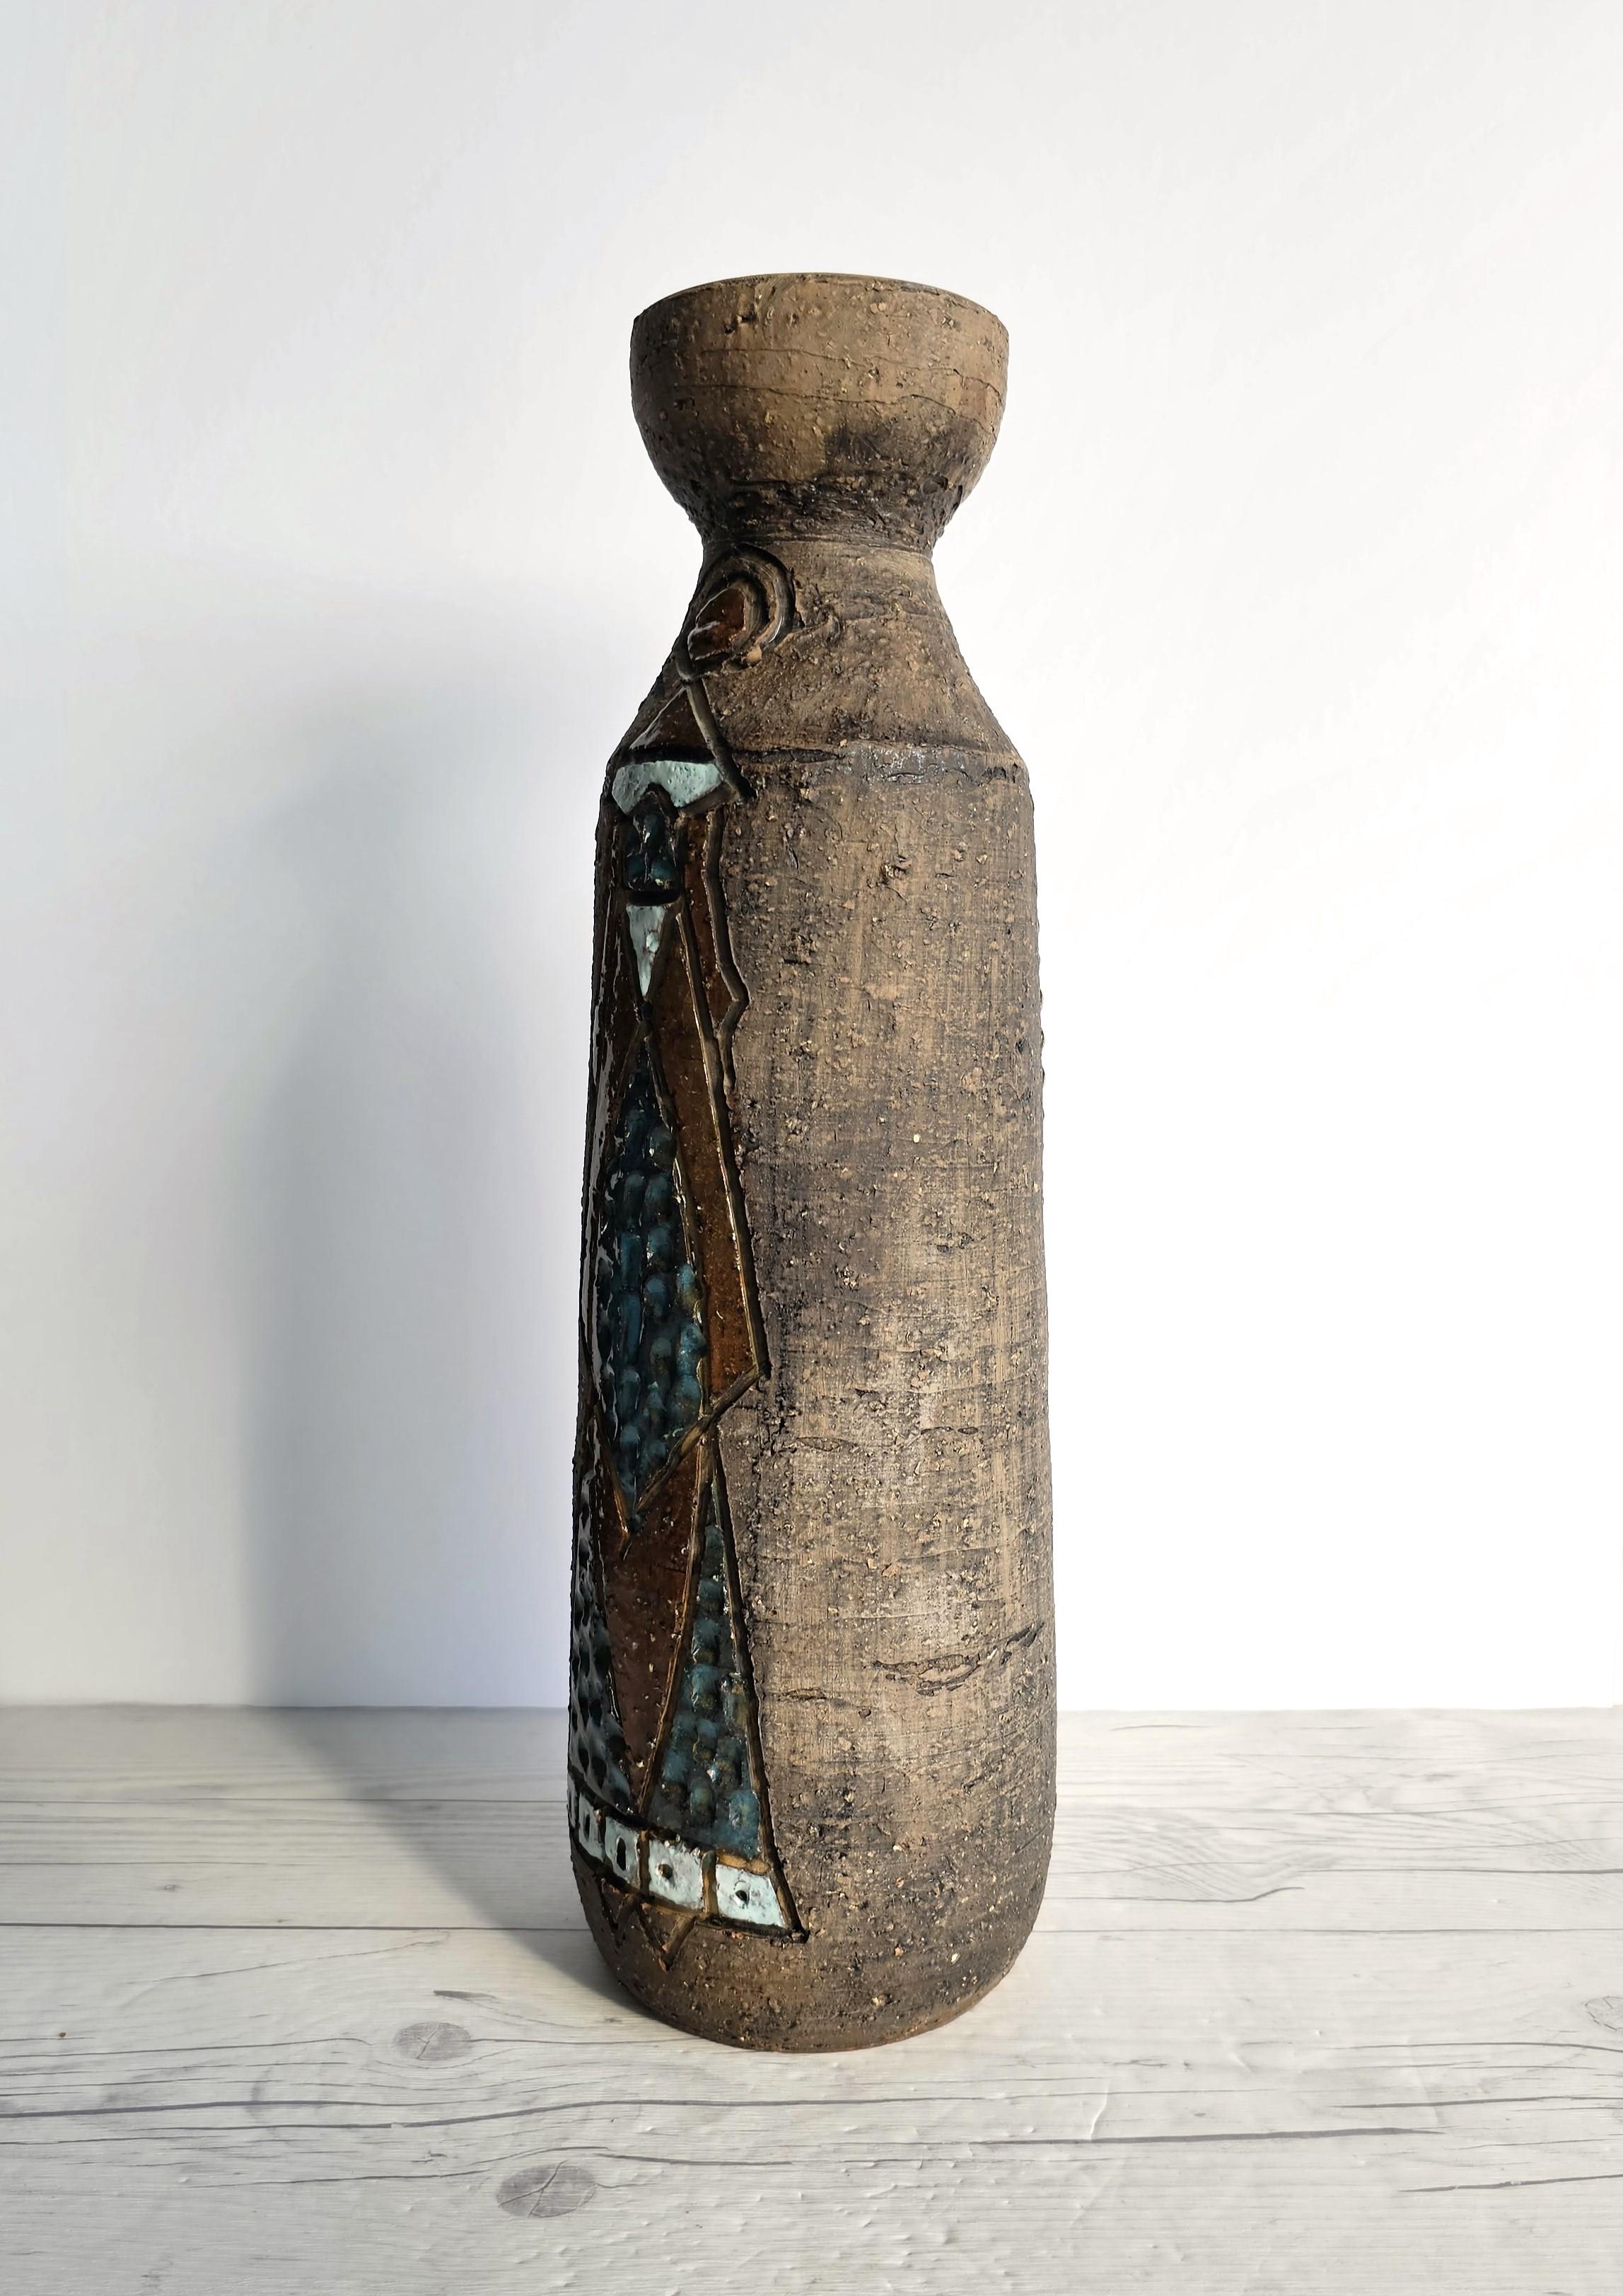 Tilgmans Keramik, Swedish Midcentury Modernist Sgraffito Sculptural Bottle Vase For Sale 1